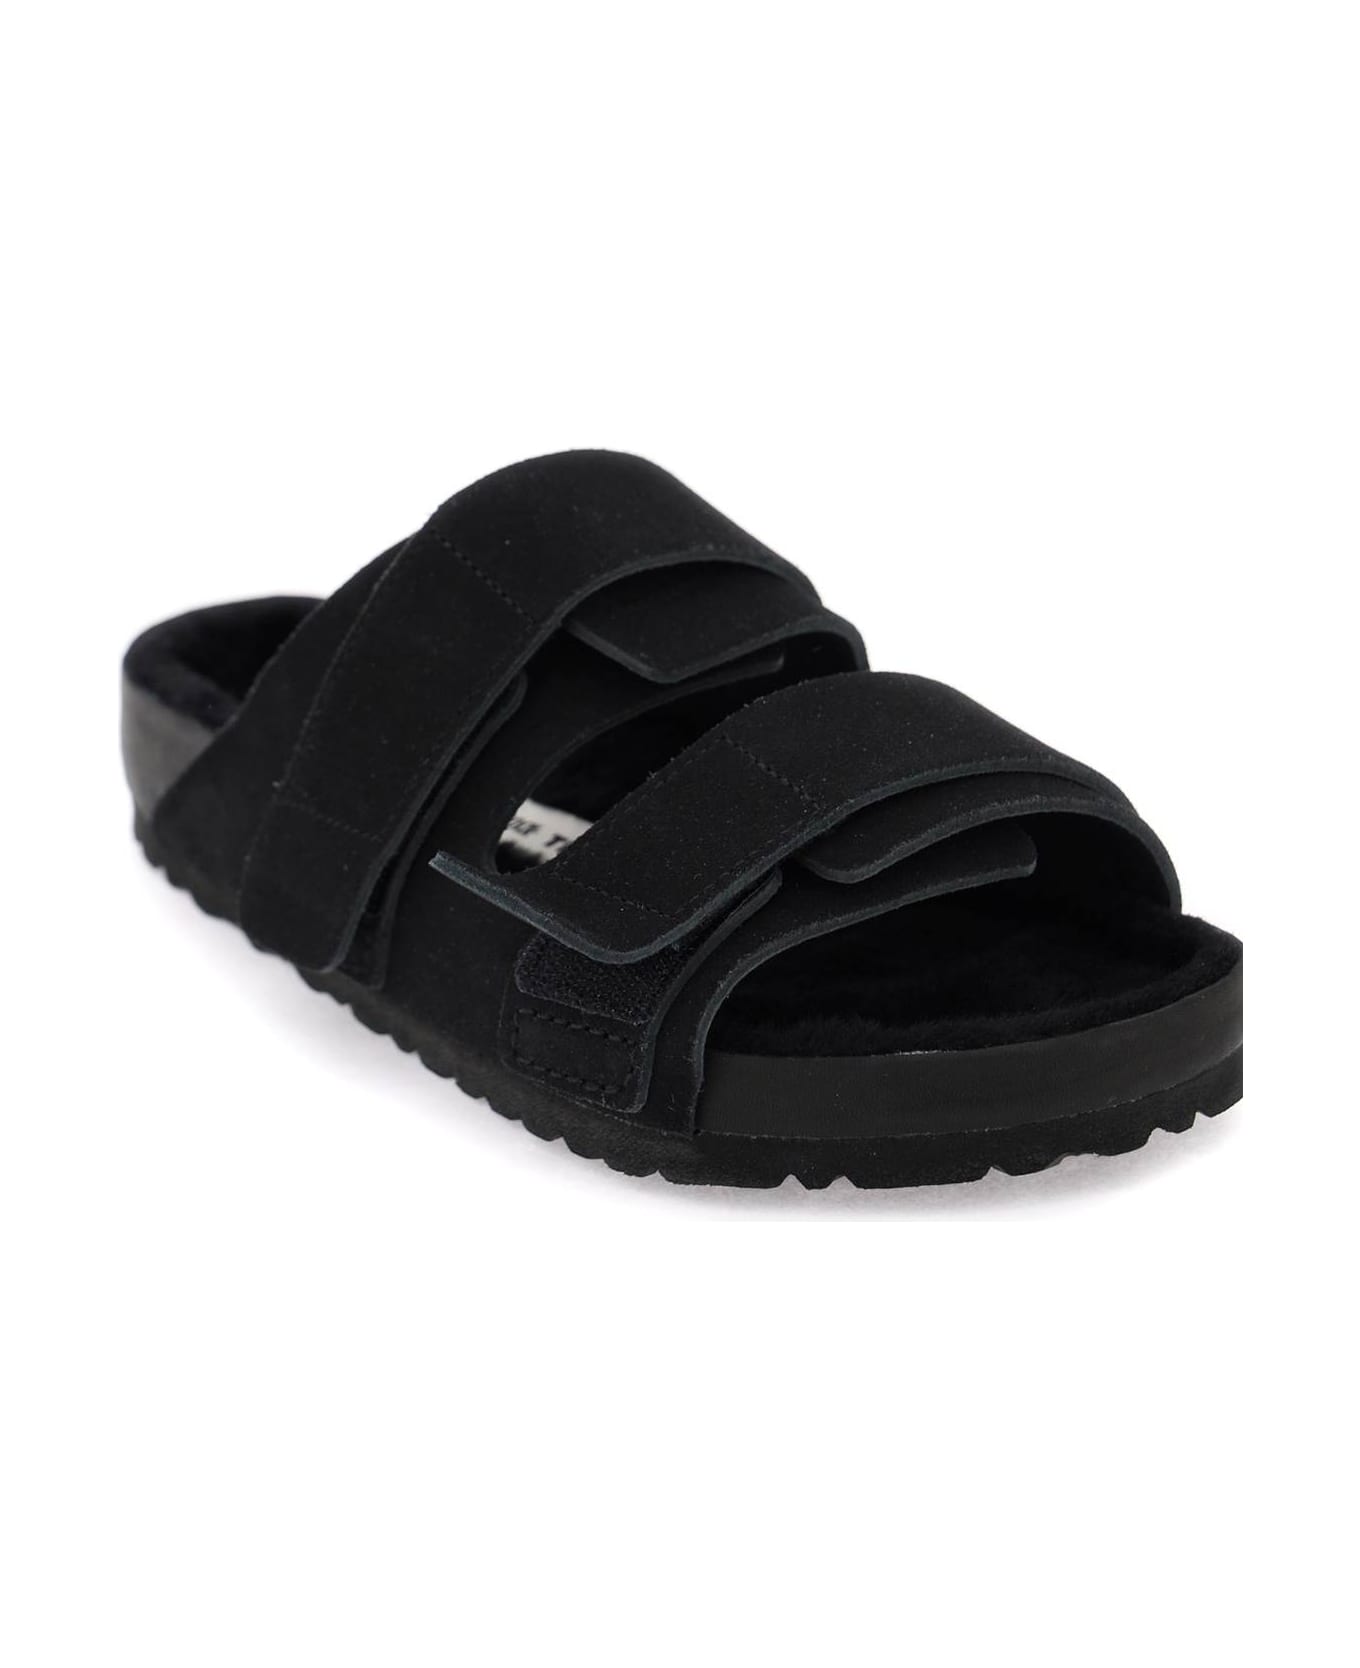 Birkenstock Uji Handstitch Sandals - SLATE